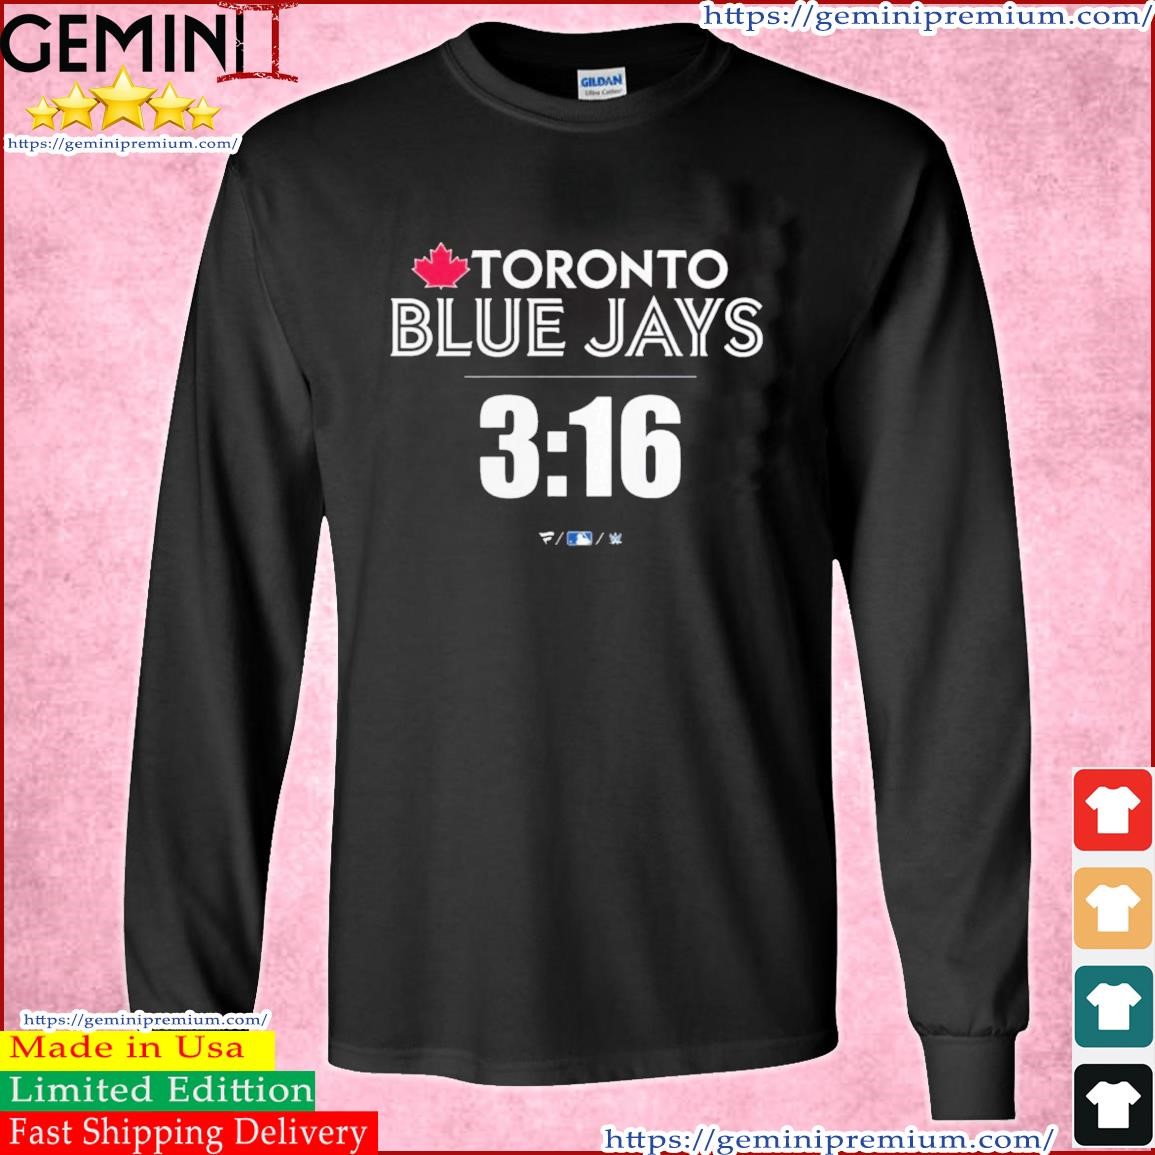 Stone Cold Steve Austin x Toronto Blue Jays 3 16 Vintage Shirt Long Sleeve Tee.jpg